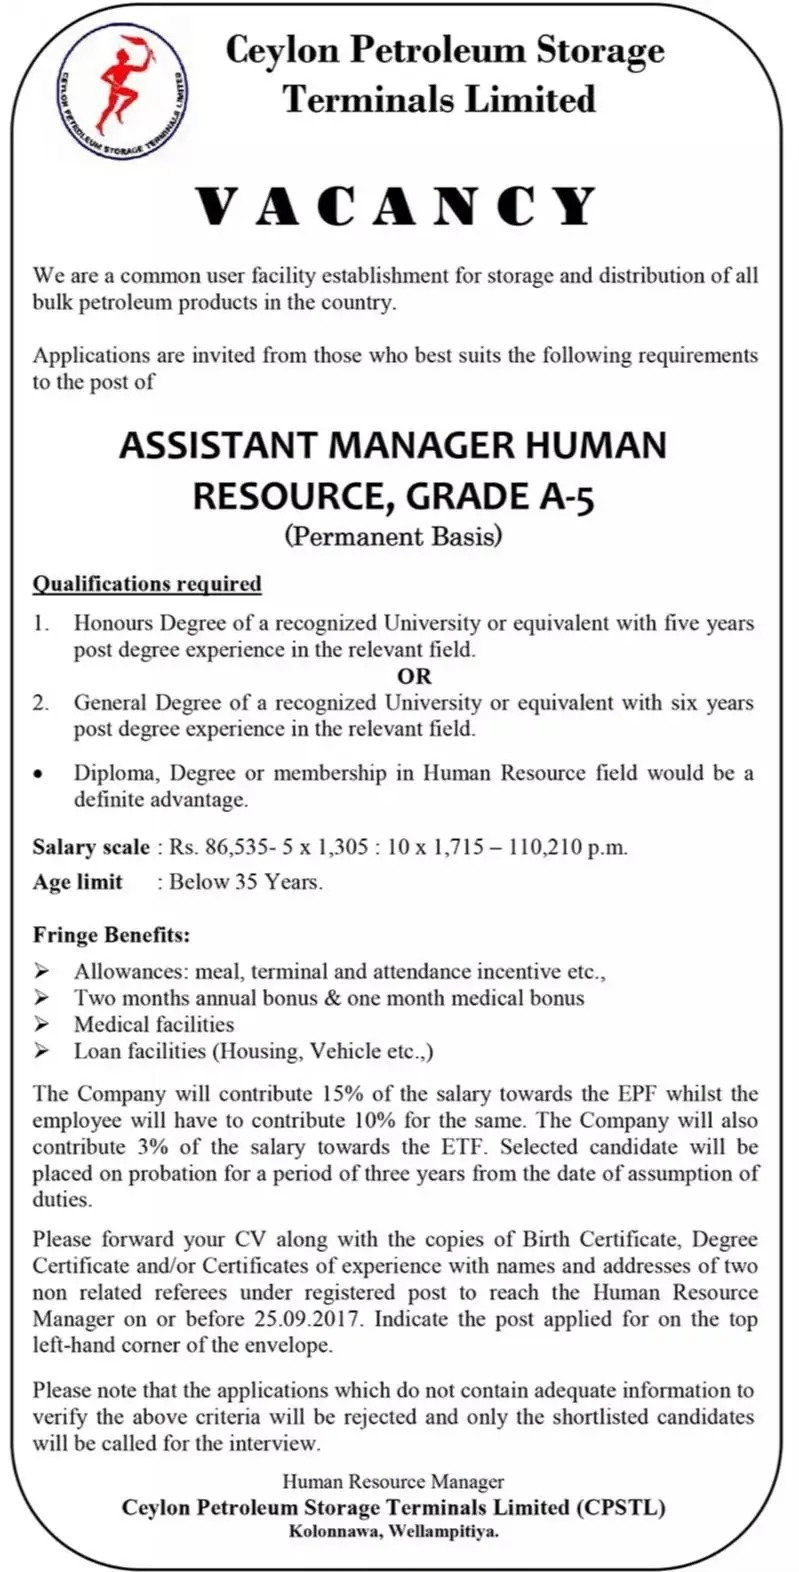 Assistant Manager Human Resource – Ceylon Petroleum Storage Terminals Ltd